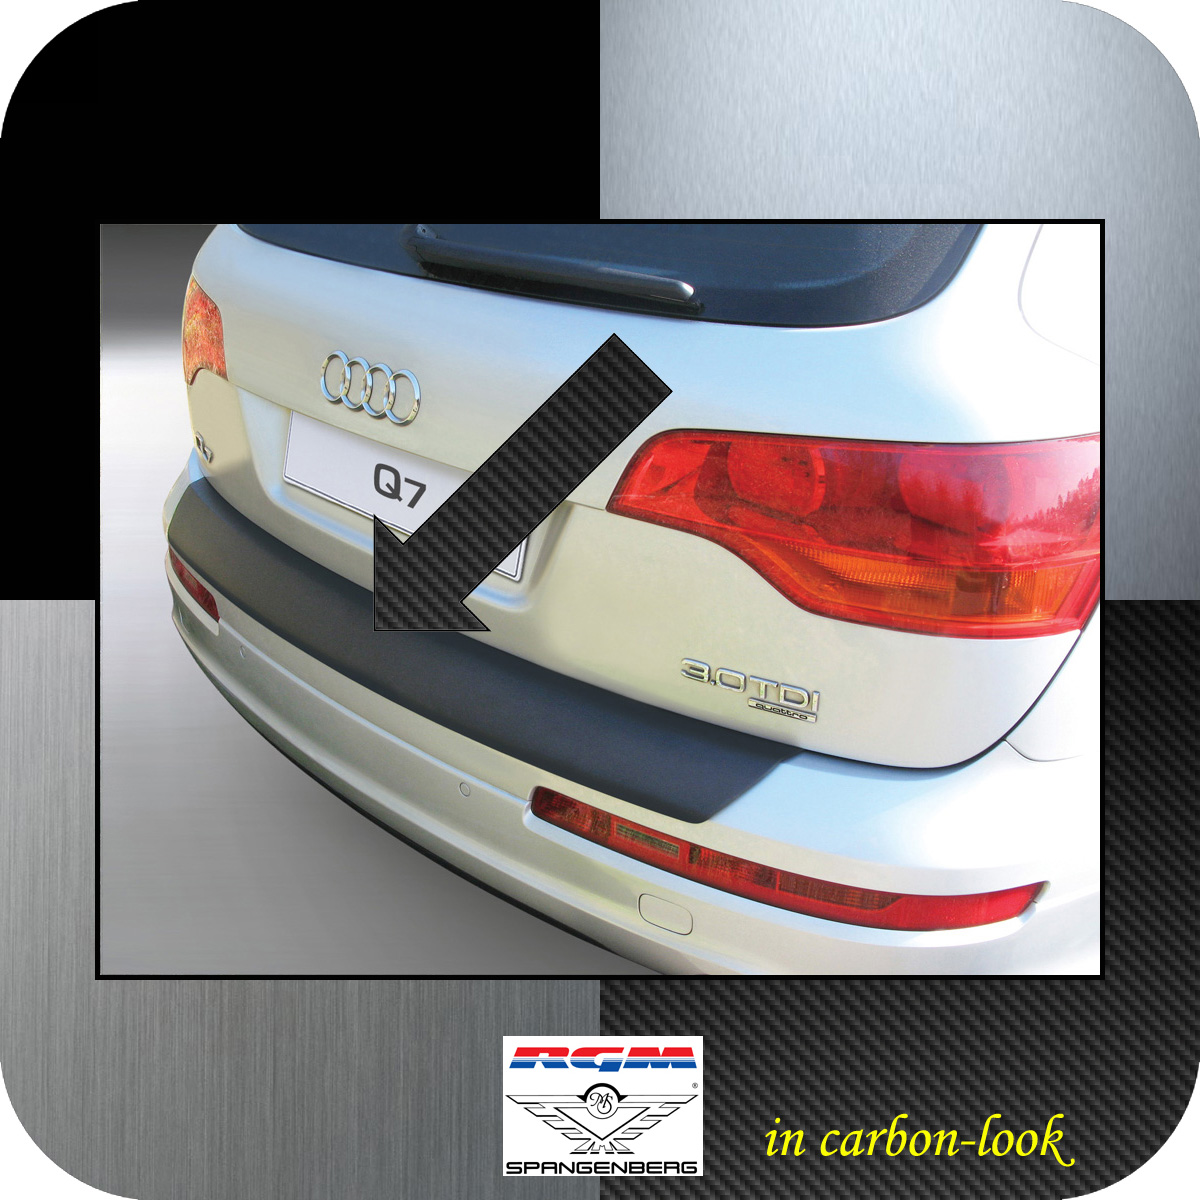 Ladekantenschutz Carbon-Look Audi Q7 I SUV Kombi Baujahre 2006-2015 3509510